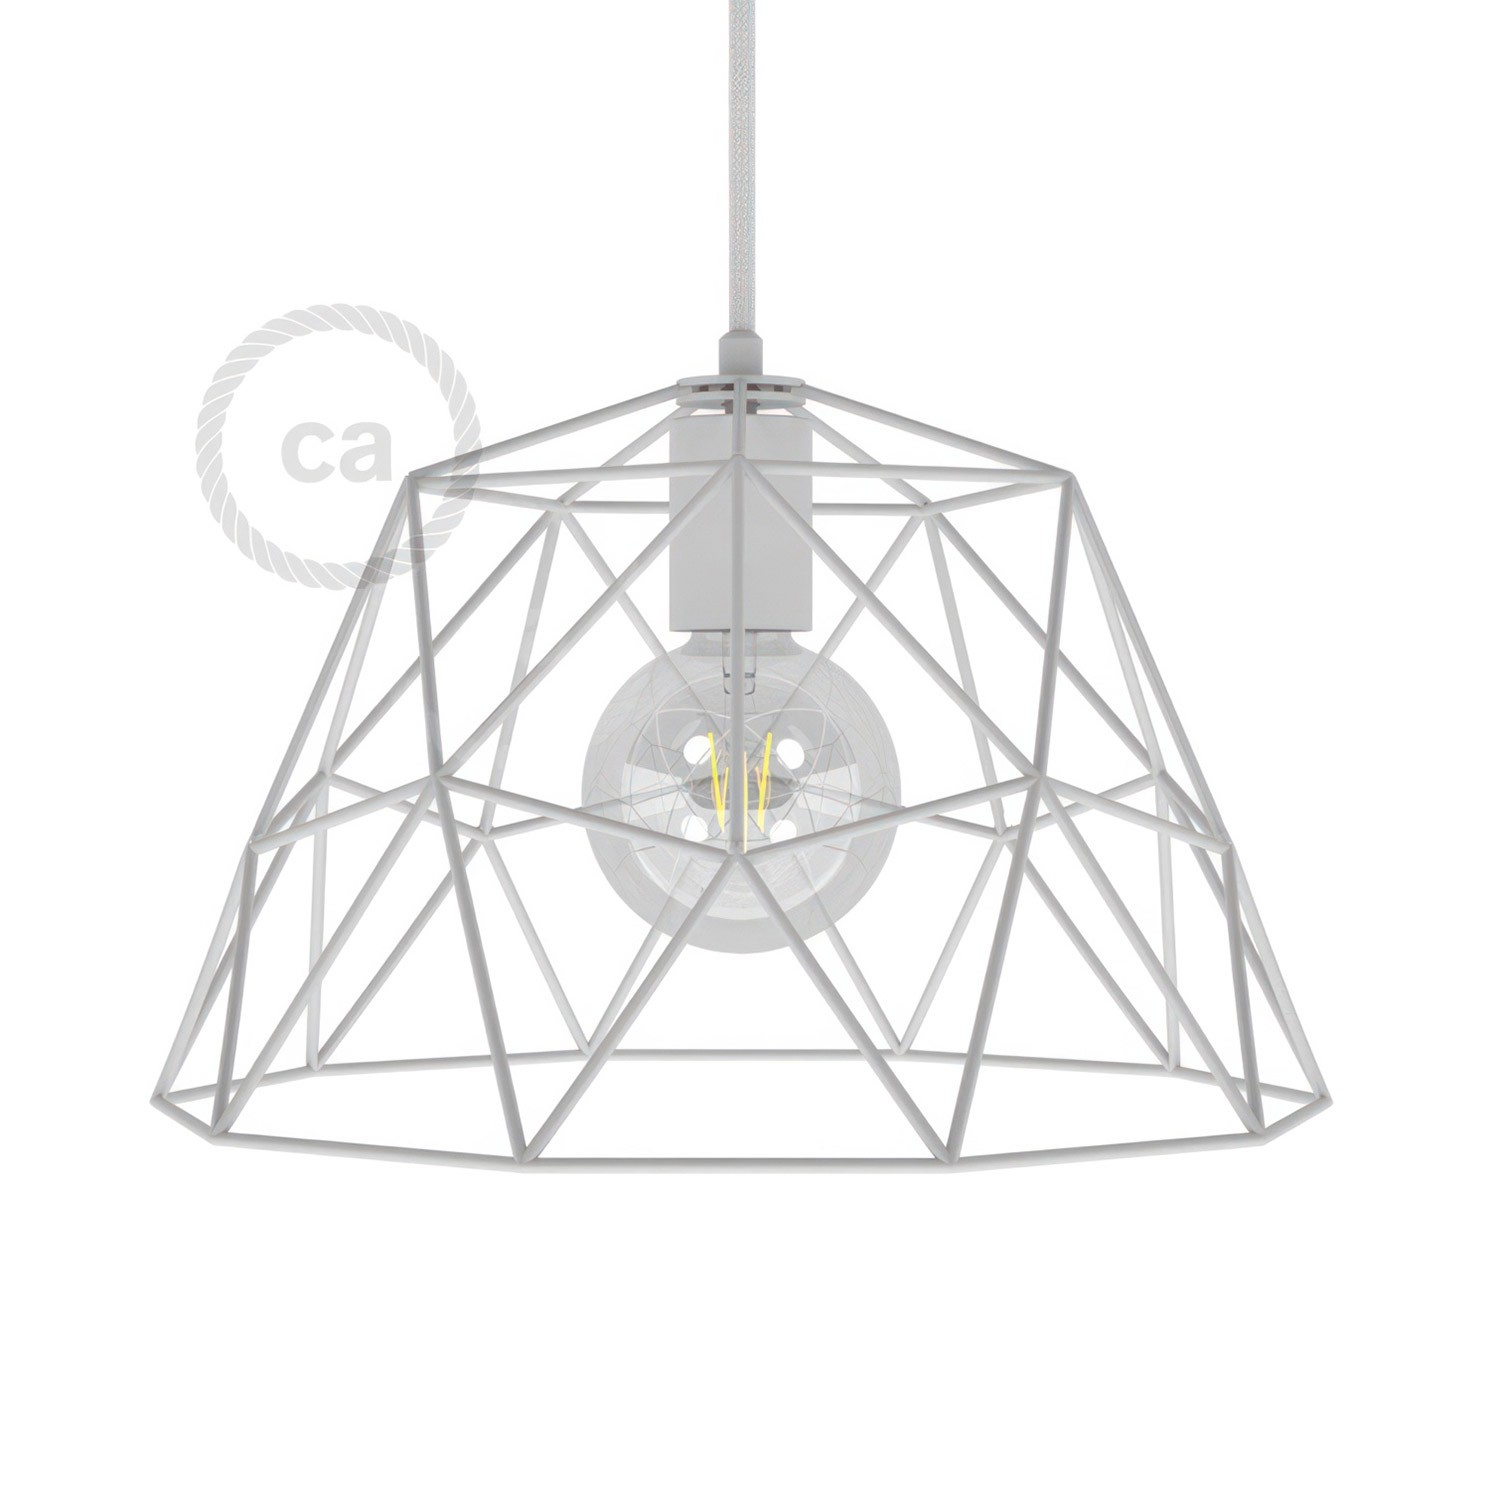 Gabbia XL paralume nudo Dome in metallo con portalampada E27